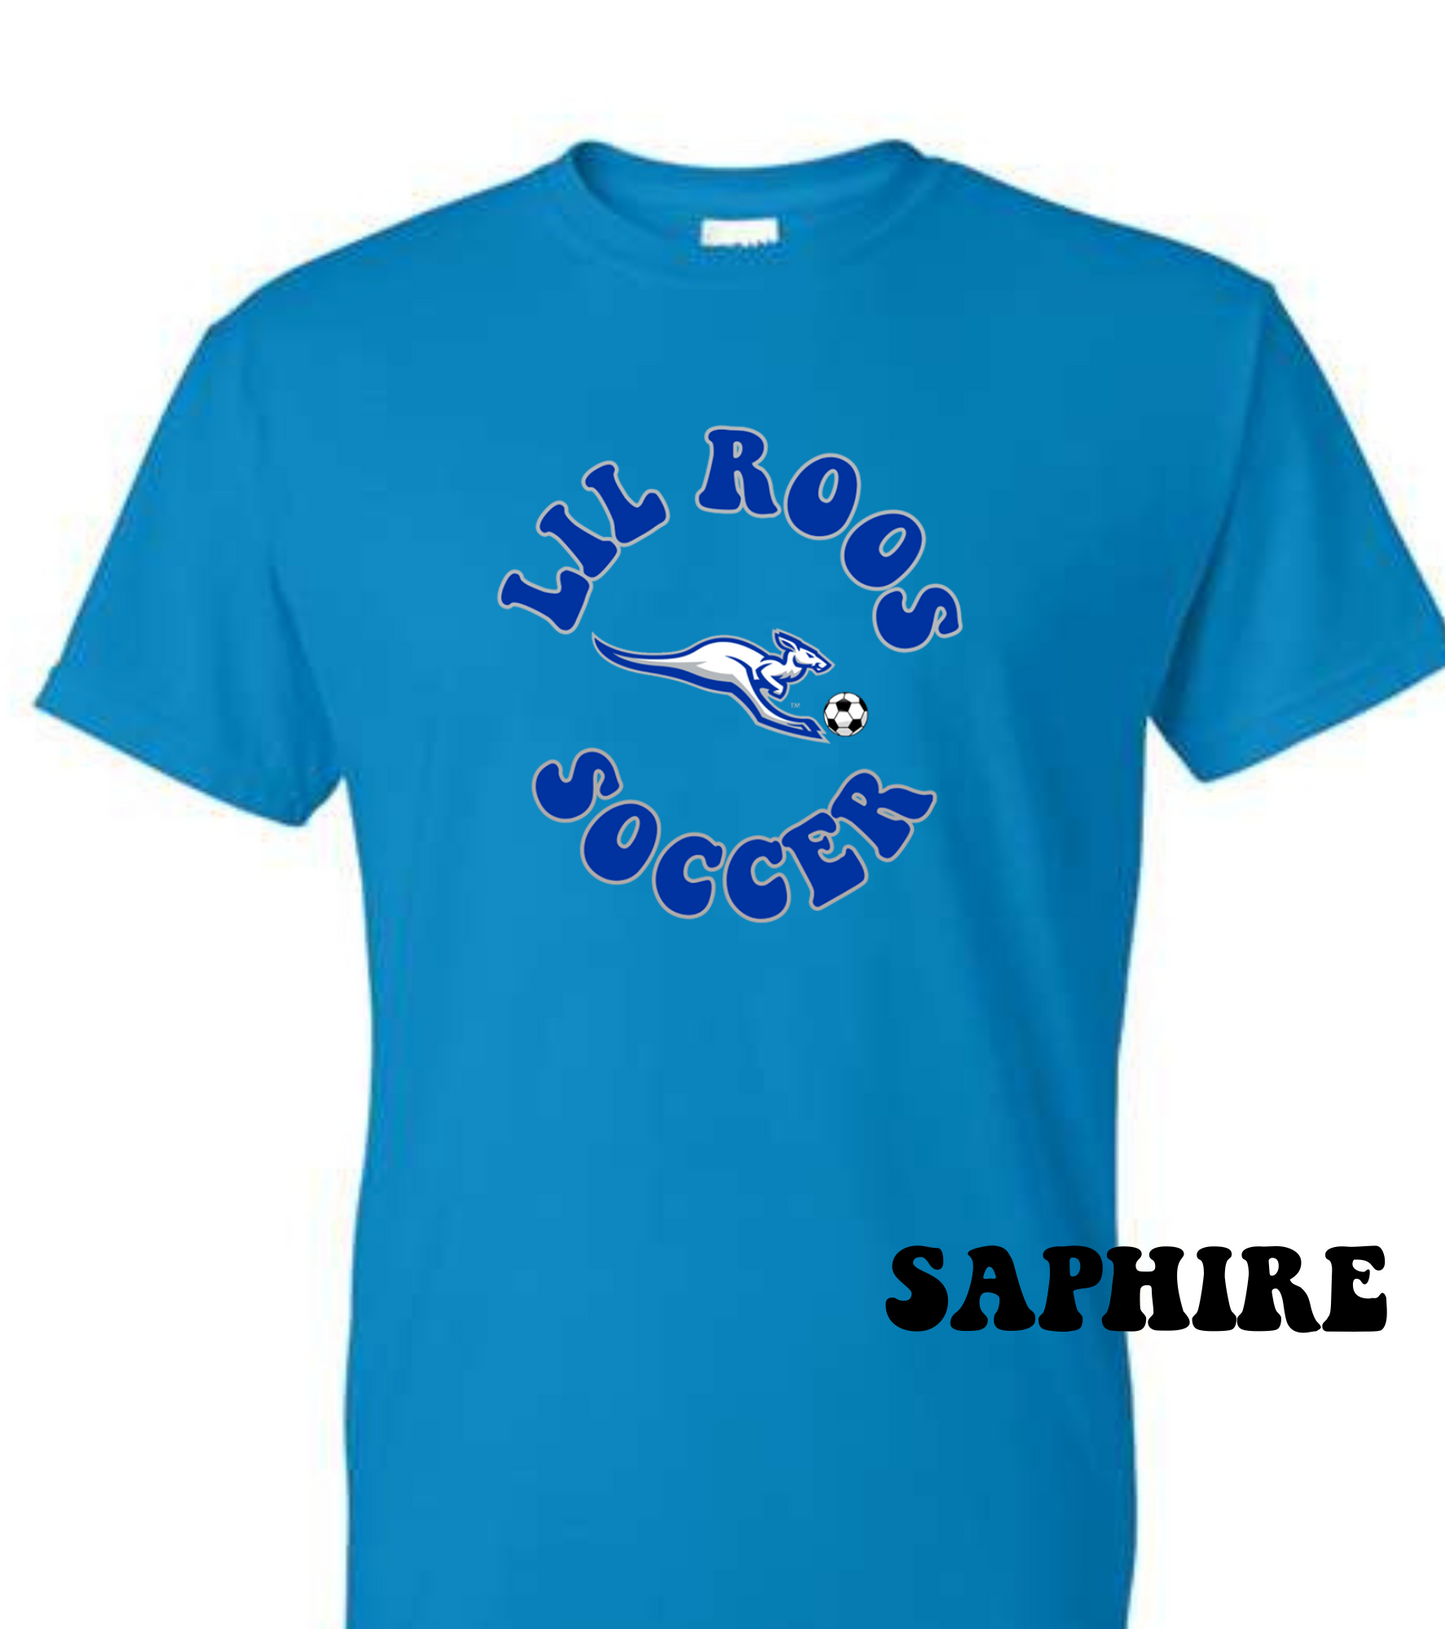 Lil' Roo Coach T shirt